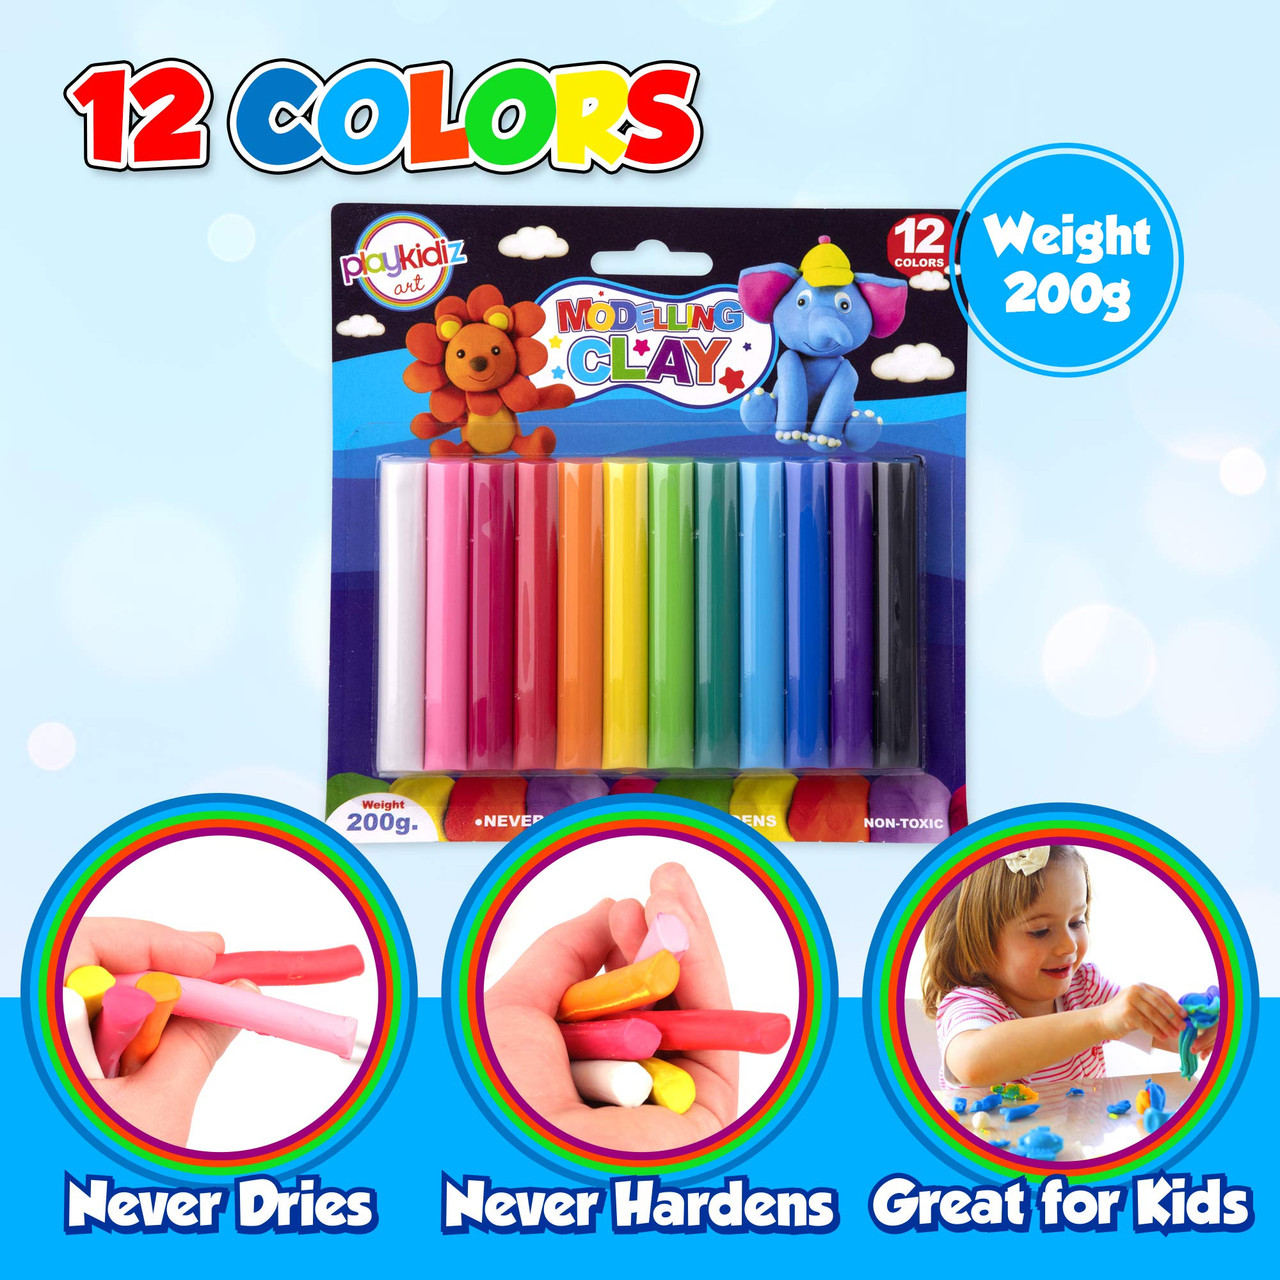 Playkidiz Art Modeling Clay 4 Colors, Beginners Pack, STEM Educational DIY  Molding Set, at Home Crafts for Kids - Toys 4 U